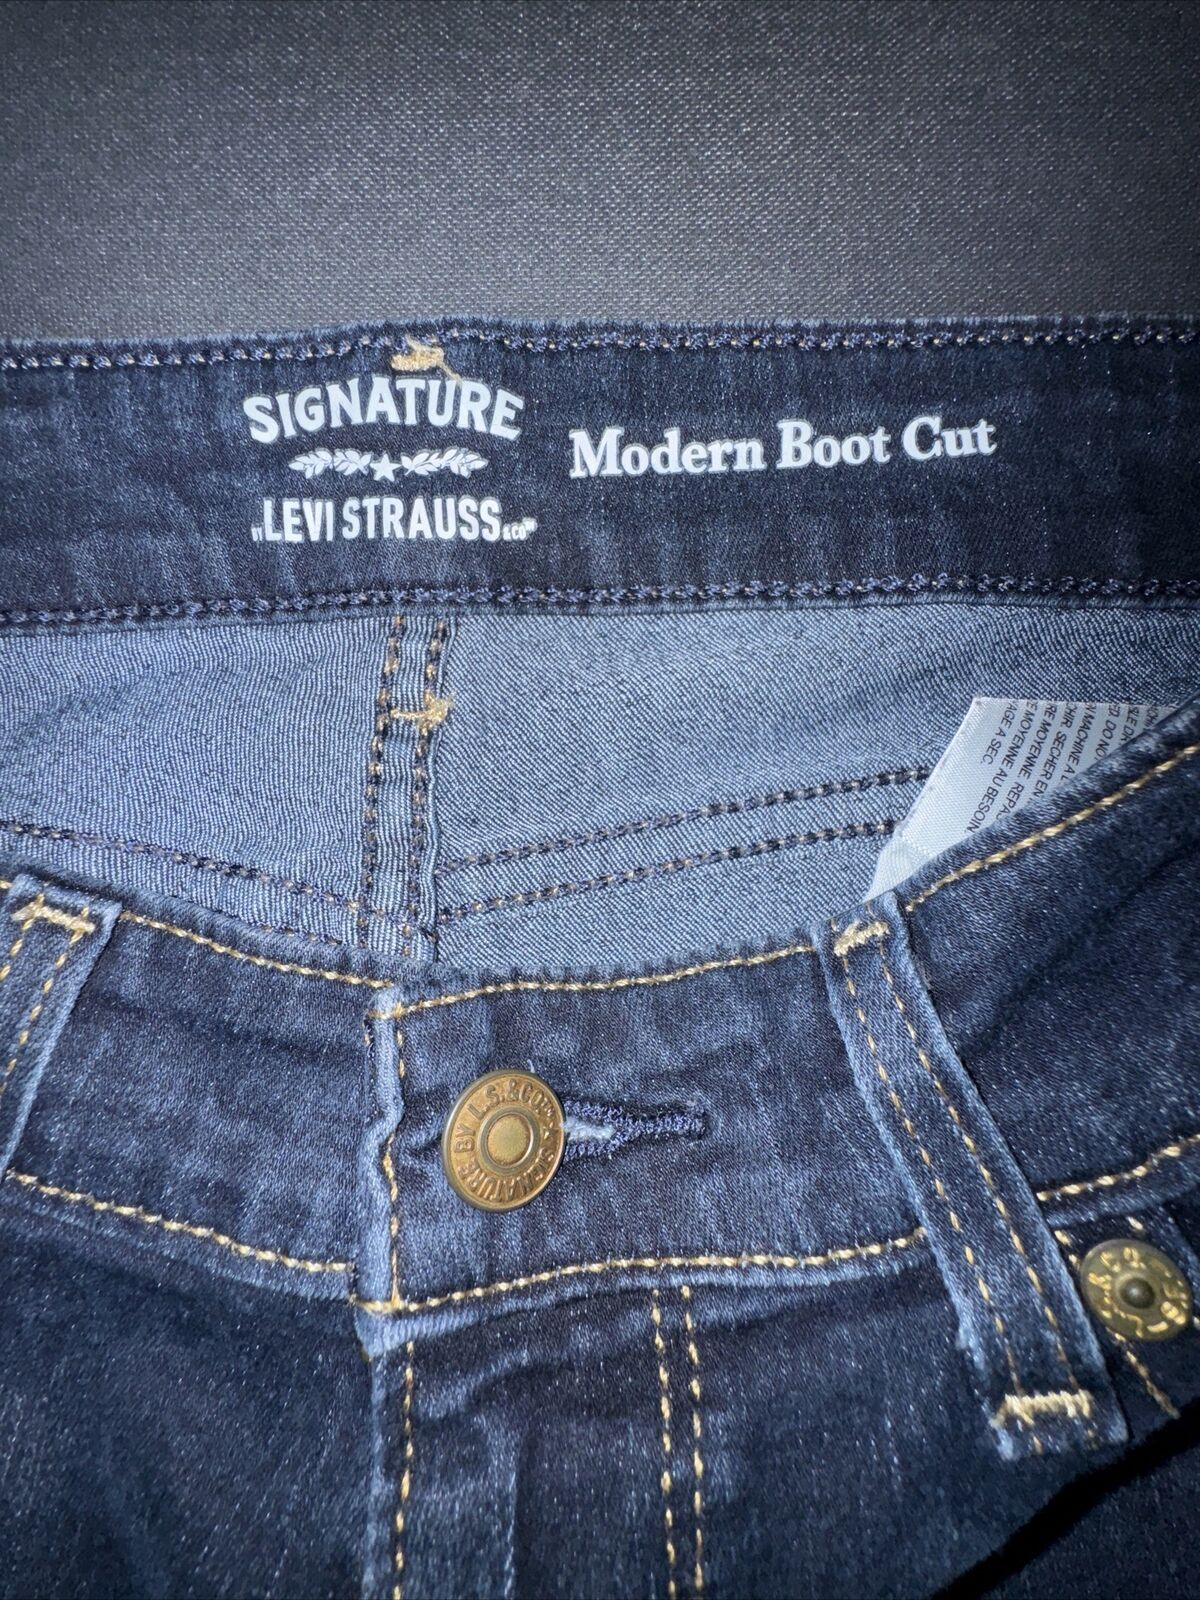 Women’s Levi’s Jeans Modern Boot Cut Size 29x30 - image 3